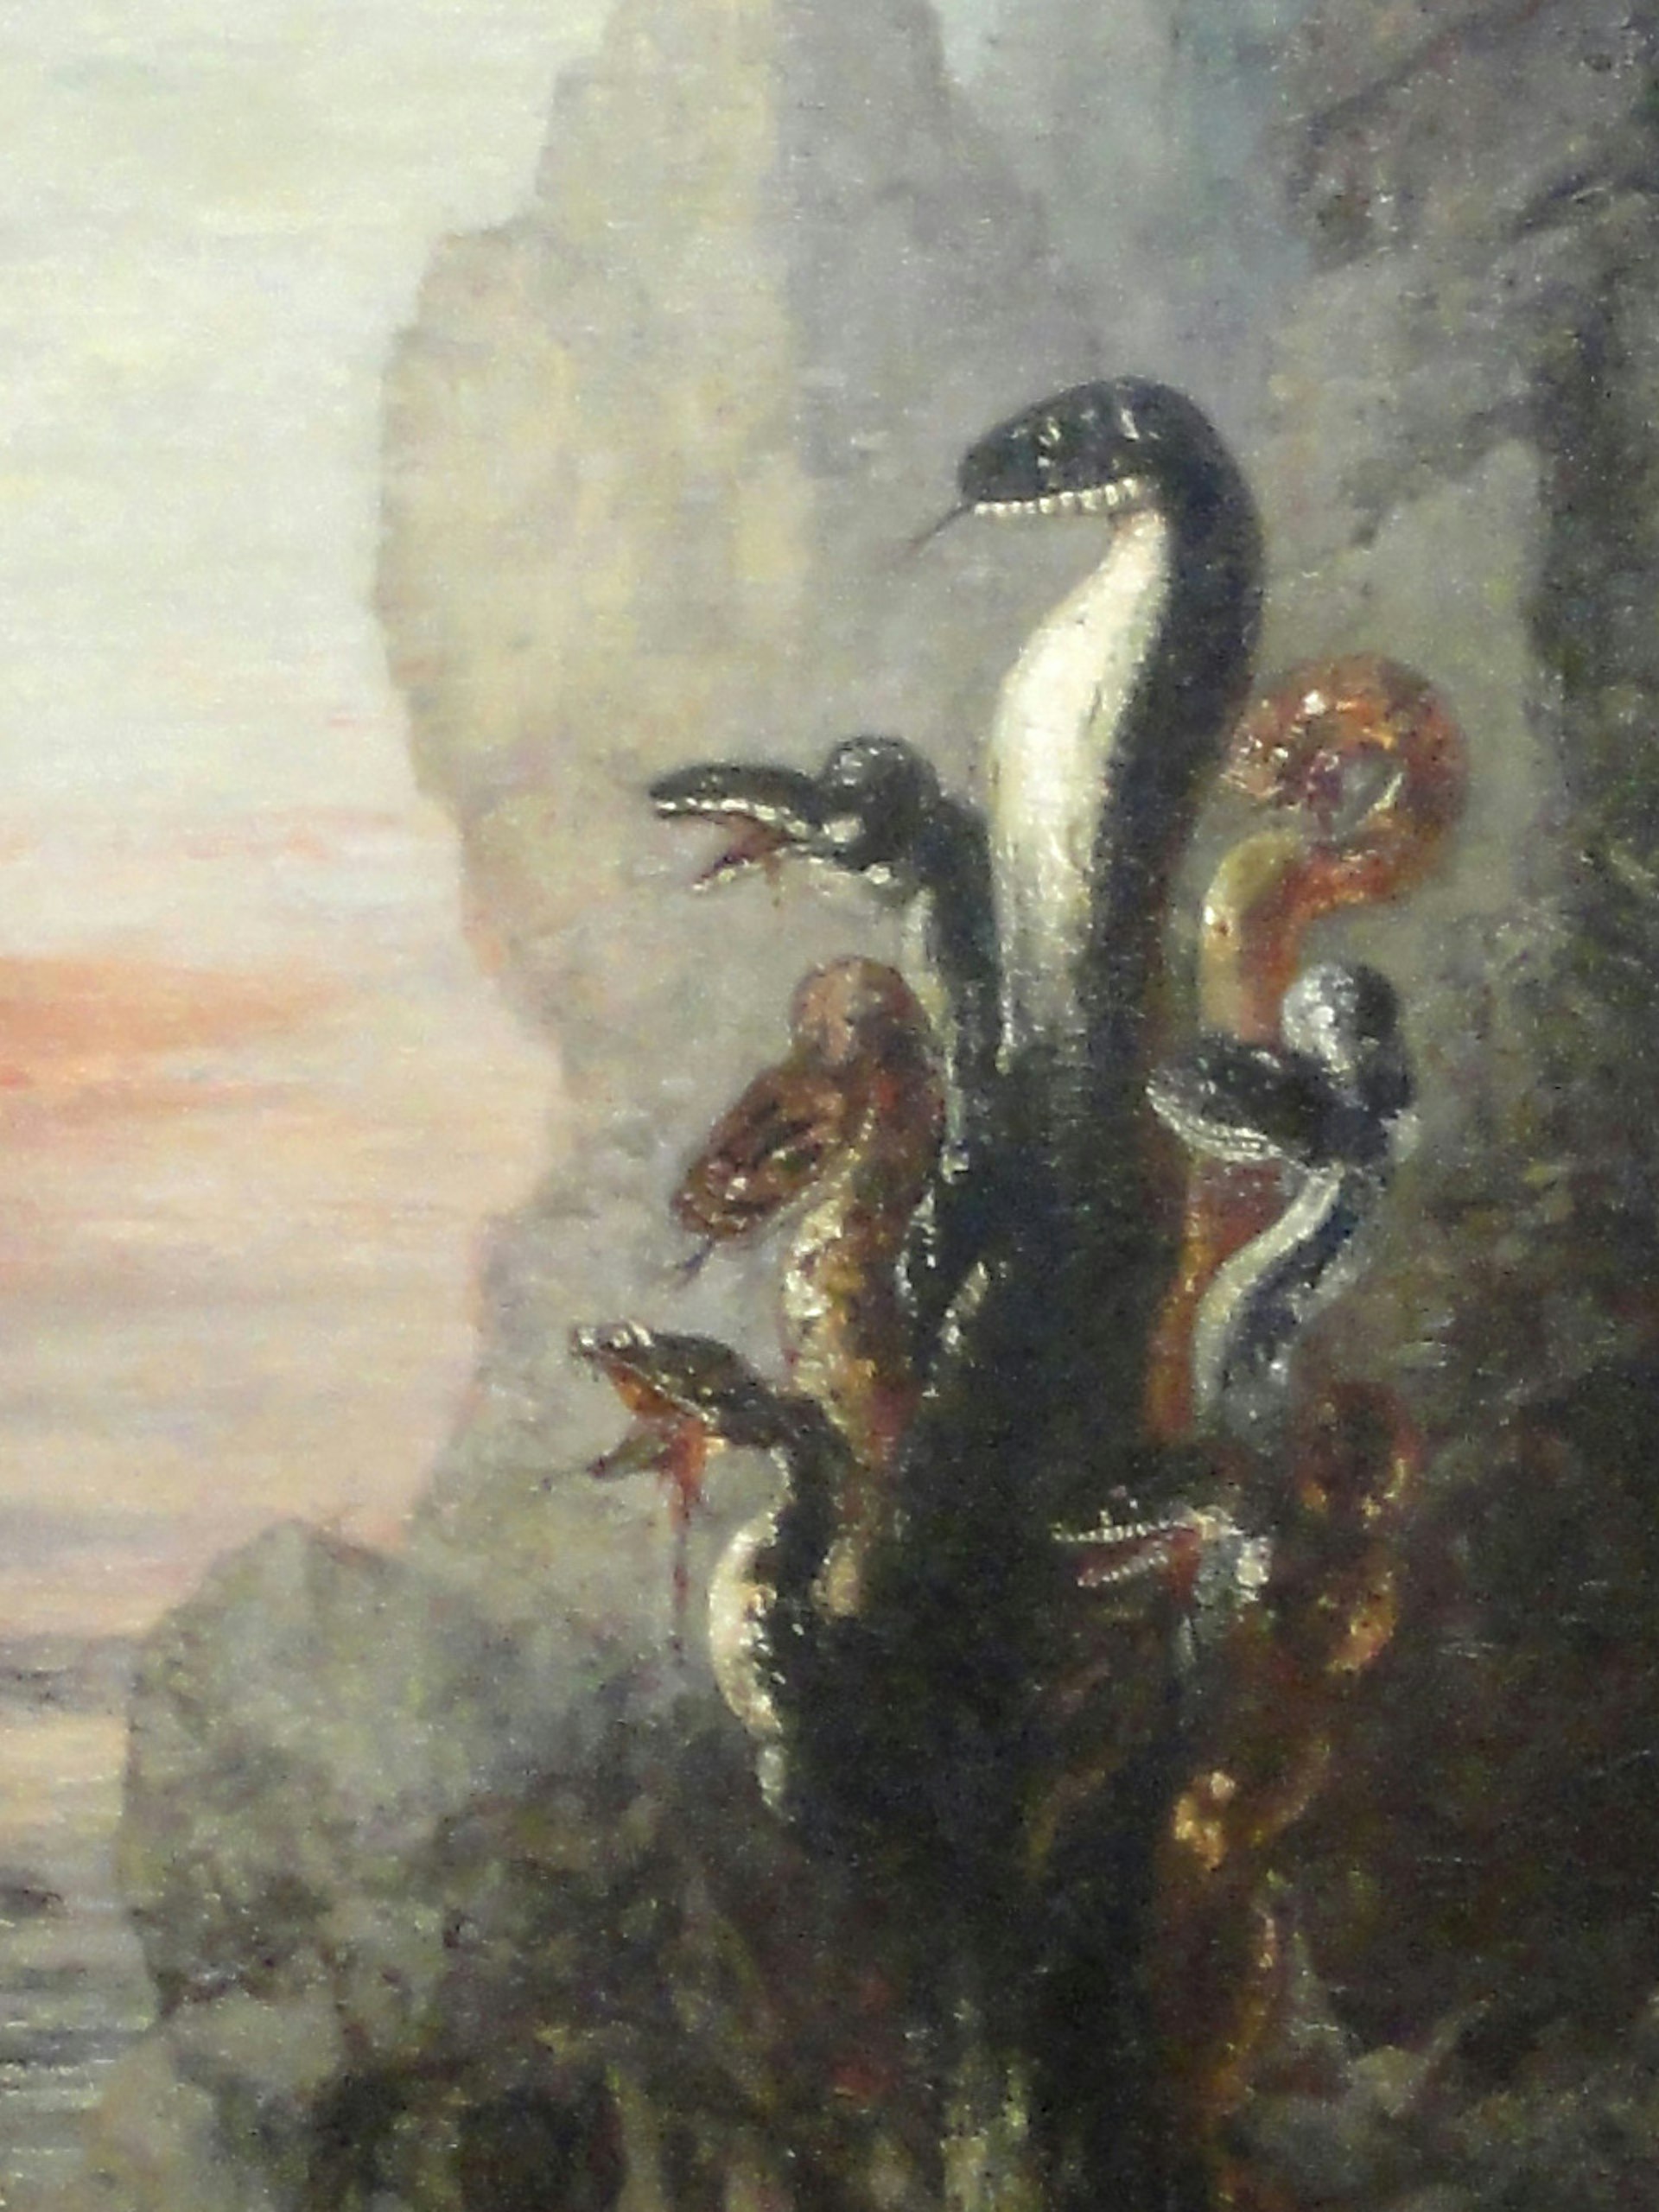 Hydra, Greek Creature (3x2)